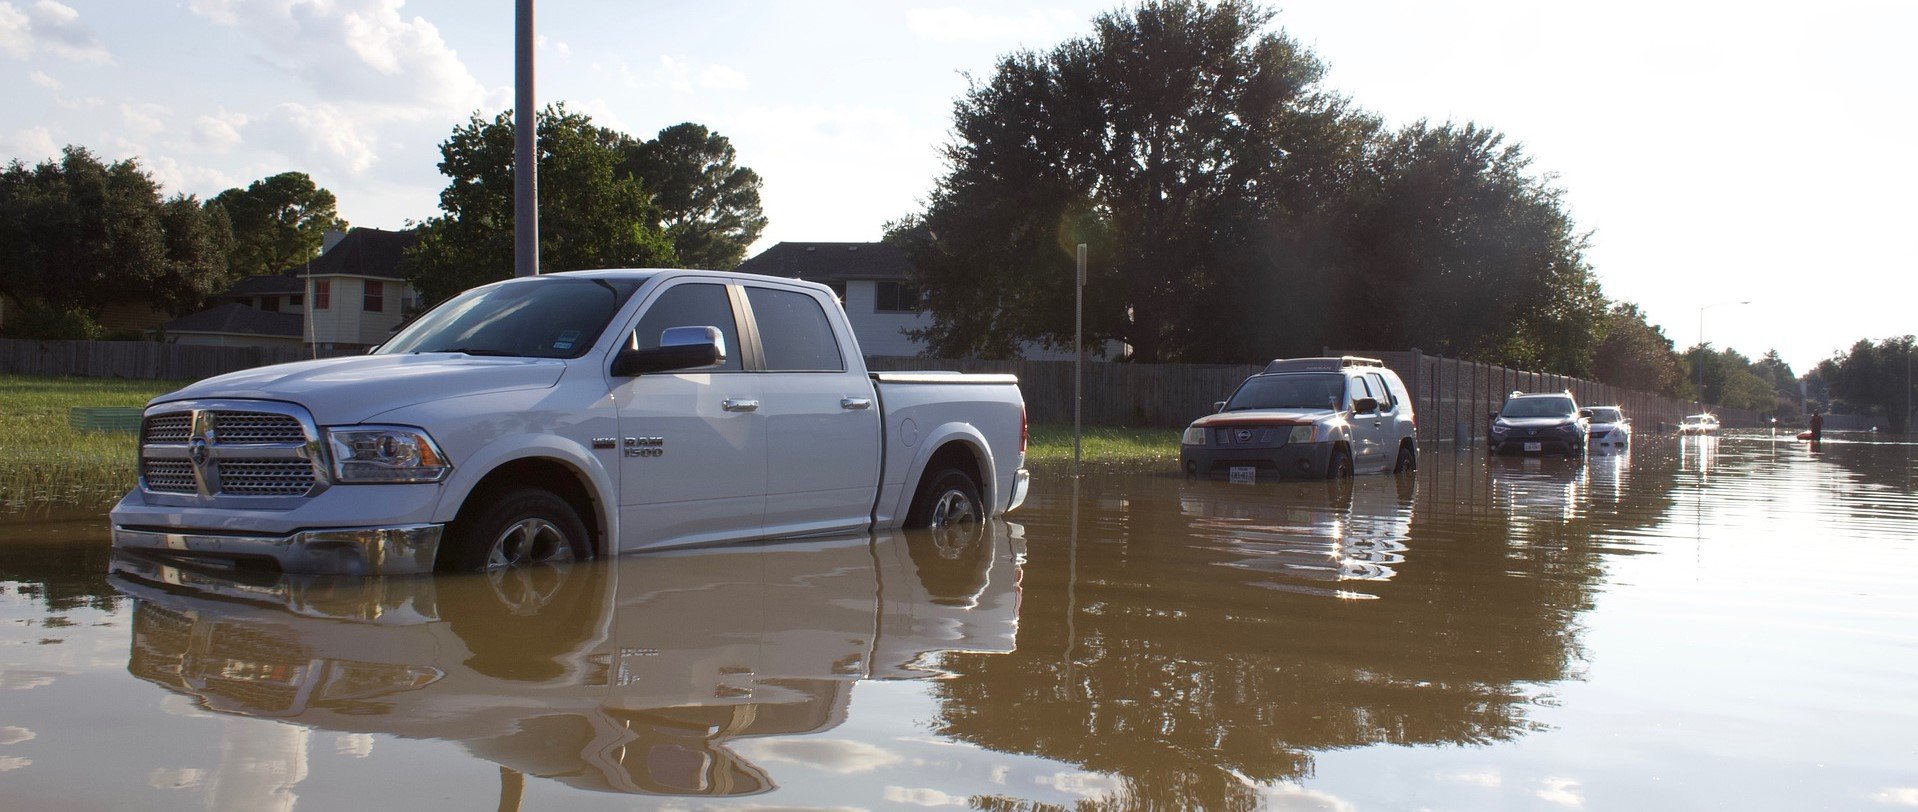 Flooded Cars in a Street - VeteranCarDonations.org